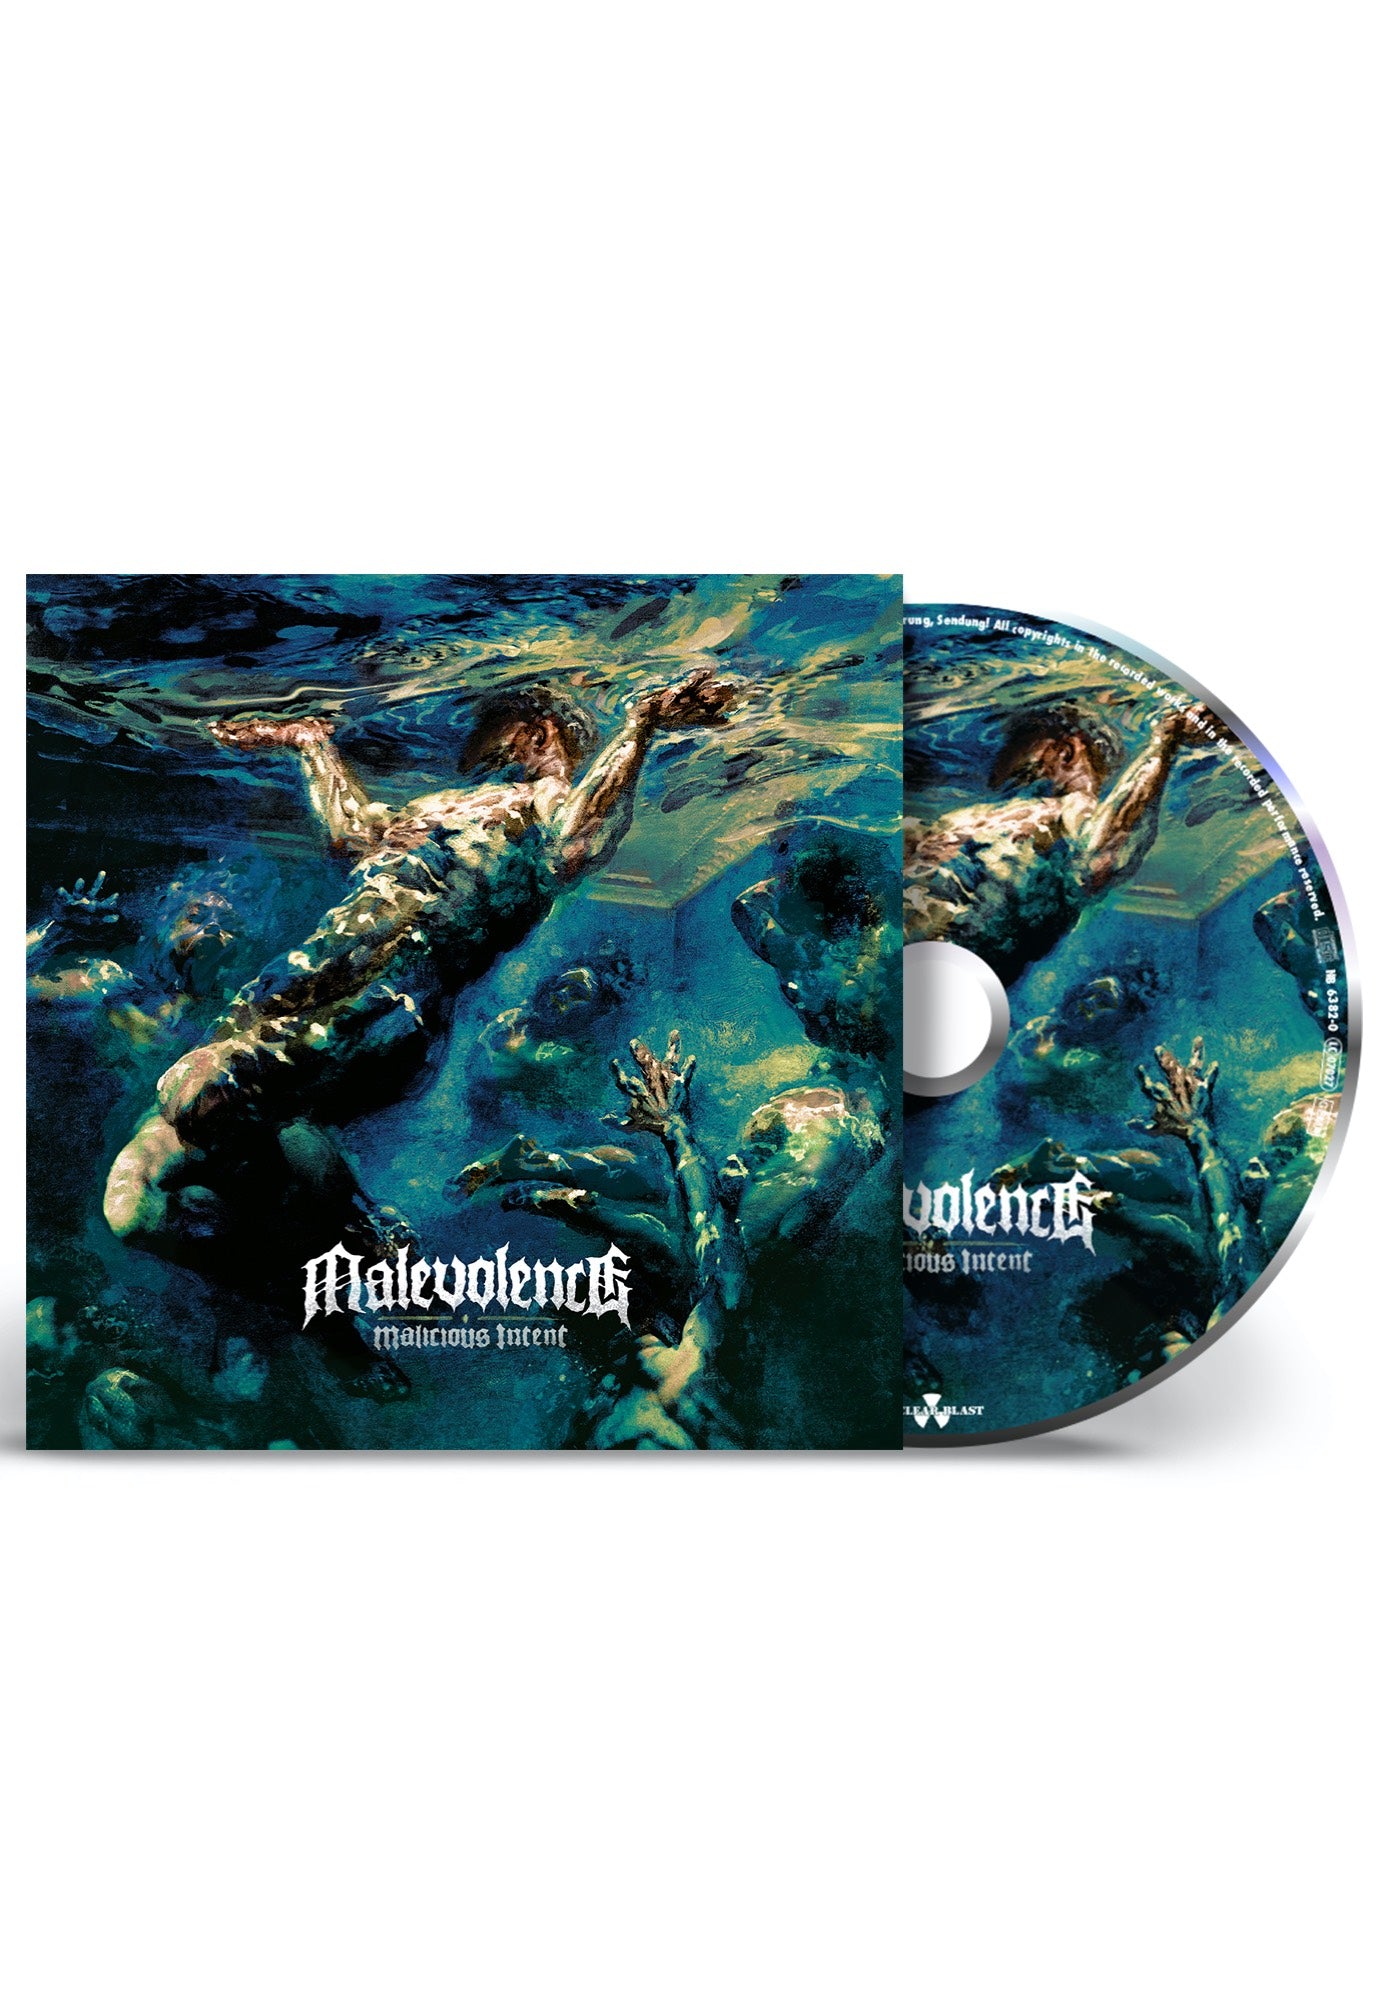 Malevolence - Malicious Intent Ltd. - Digipak CD